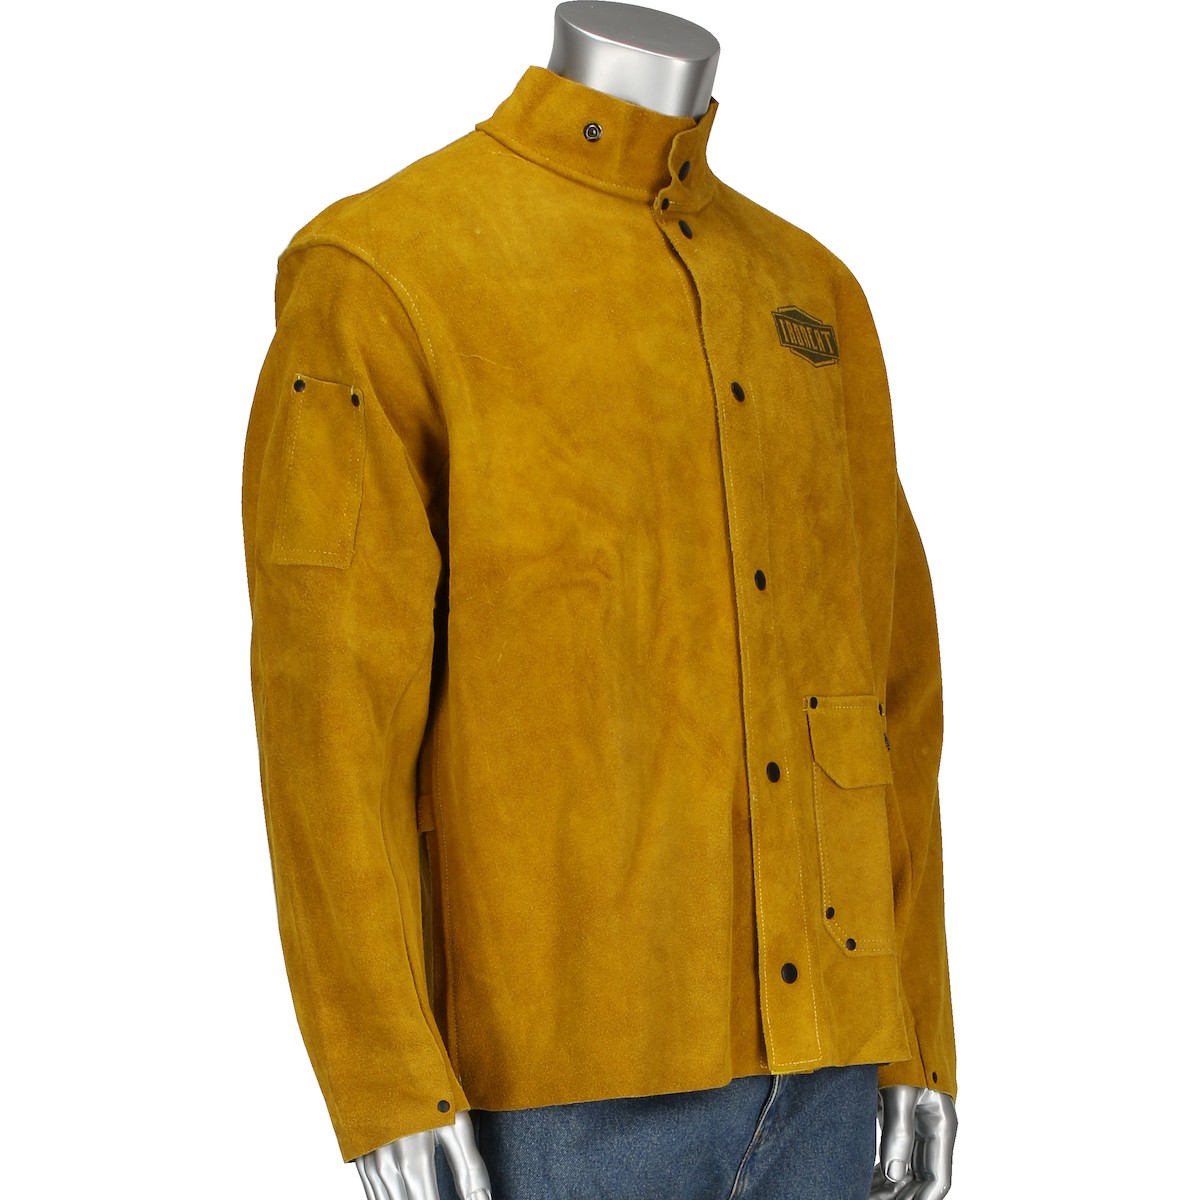 Ironcat® Ironcat® Split Leather Welding Jacket  (#7005)